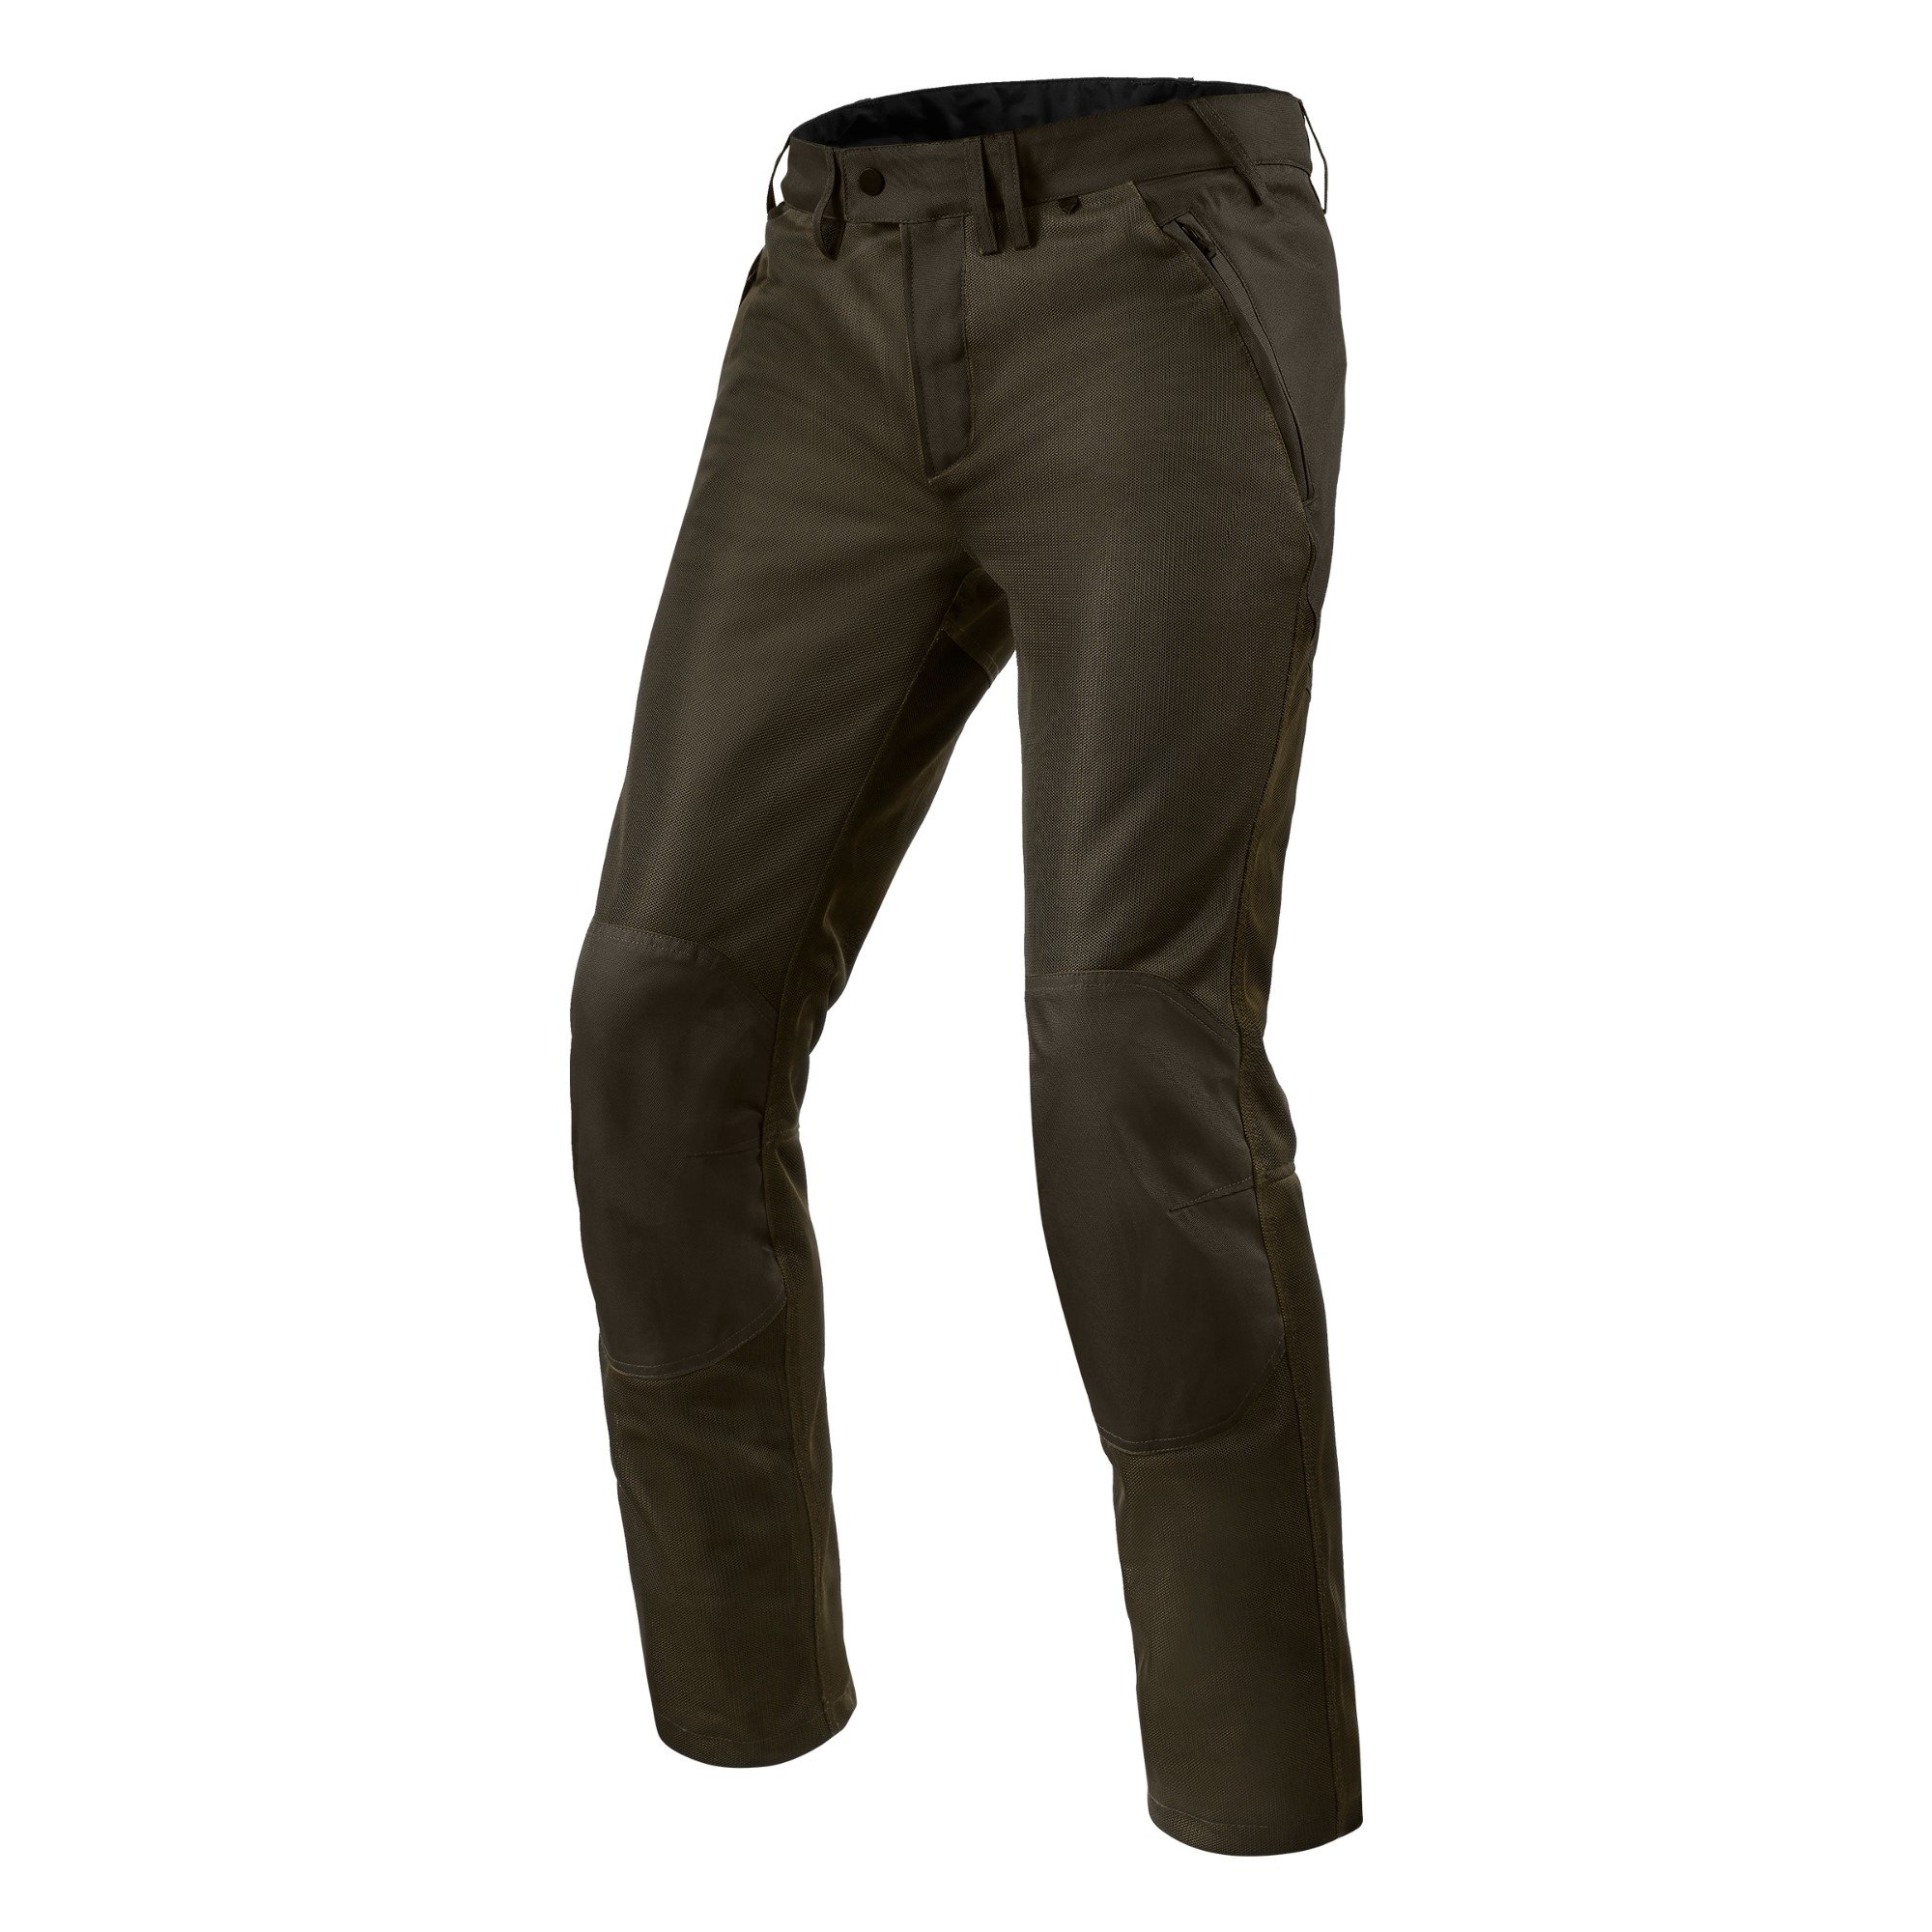 Image of REV'IT! Pants Eclipse 2 Black Olive Short Motorcycle Pants Size 4XL ID 8700001368841